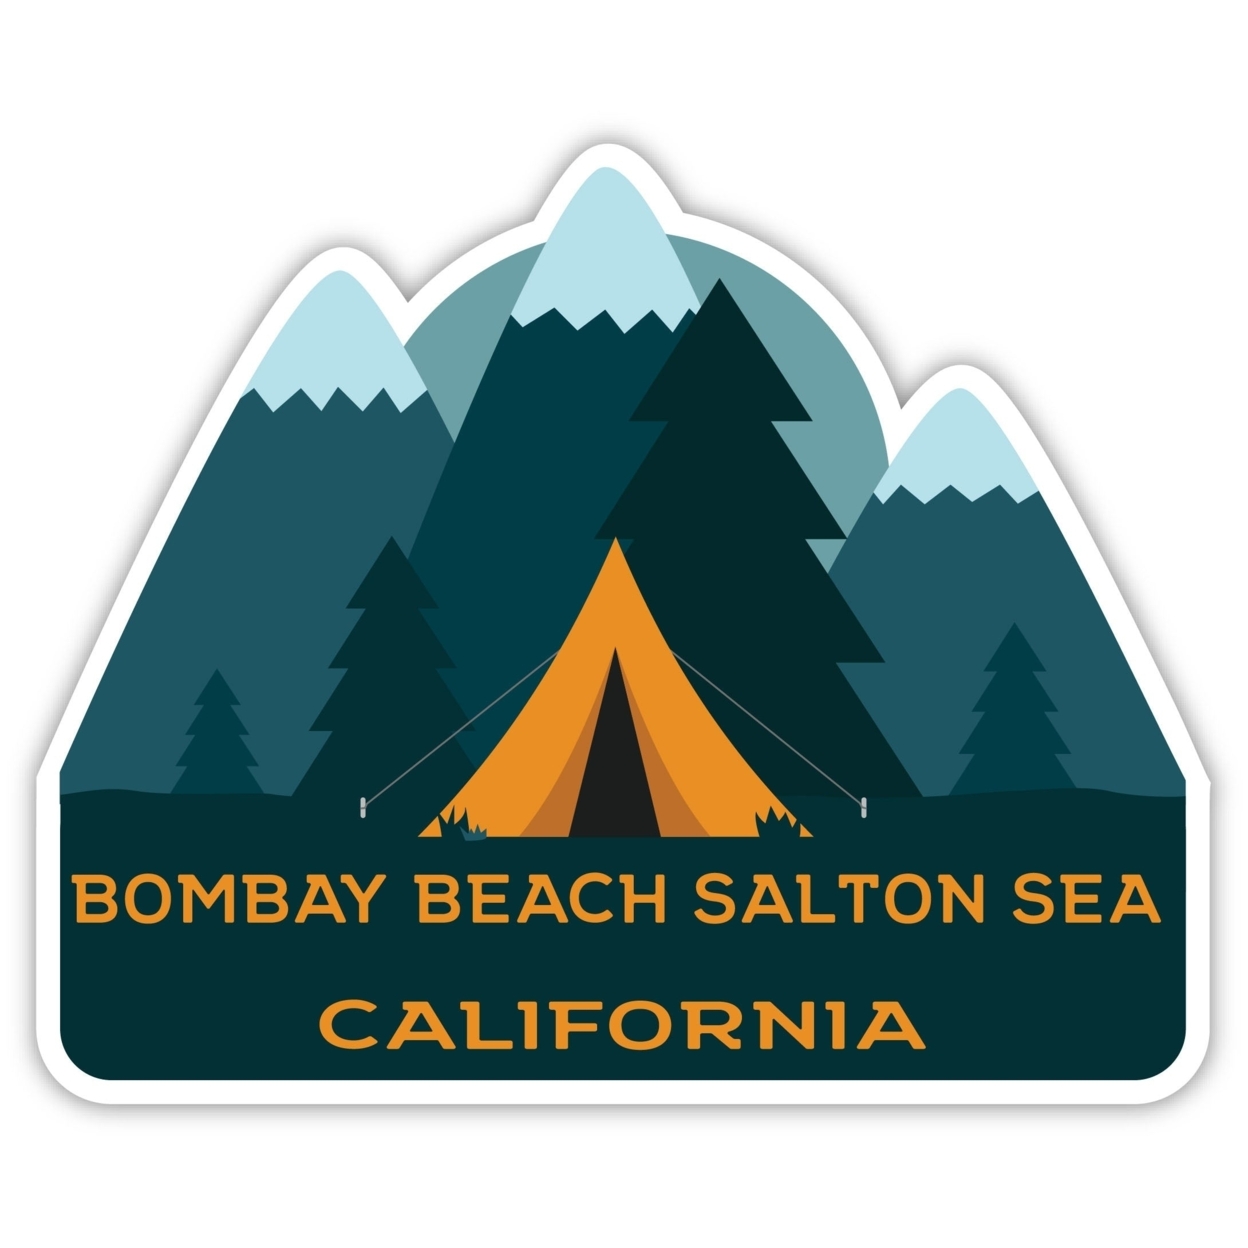 Bombay Beach Salton Sea California Souvenir Decorative Stickers (Choose Theme And Size) - Single Unit, 12-Inch, Camp Life